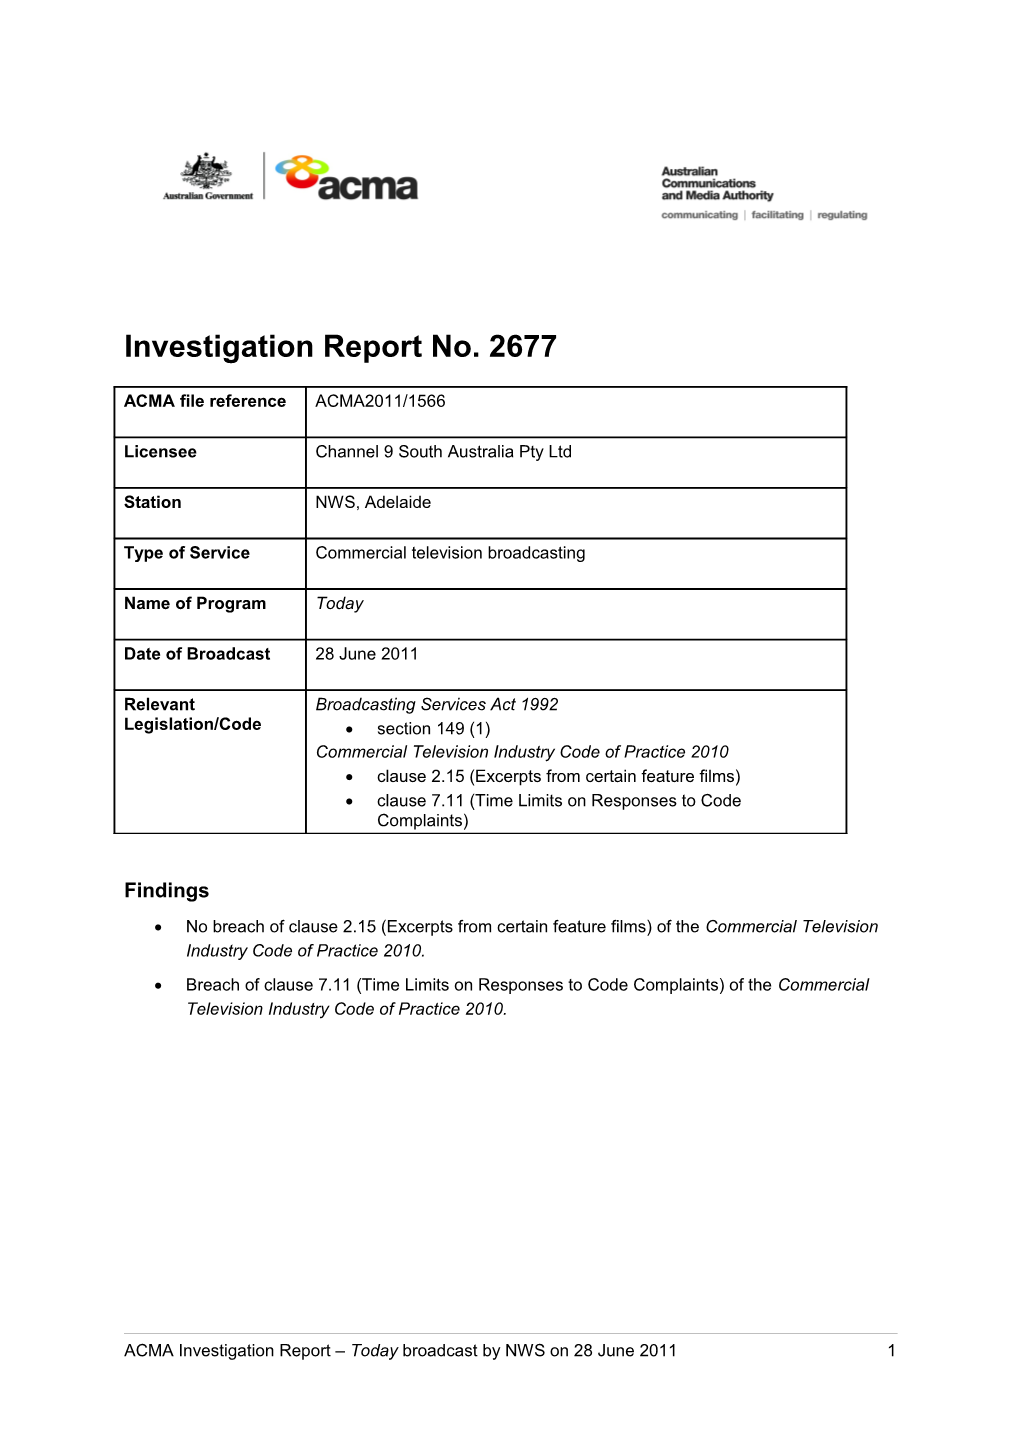 NWS (Ch 9 SA) - ACMA Investigation Report 2677